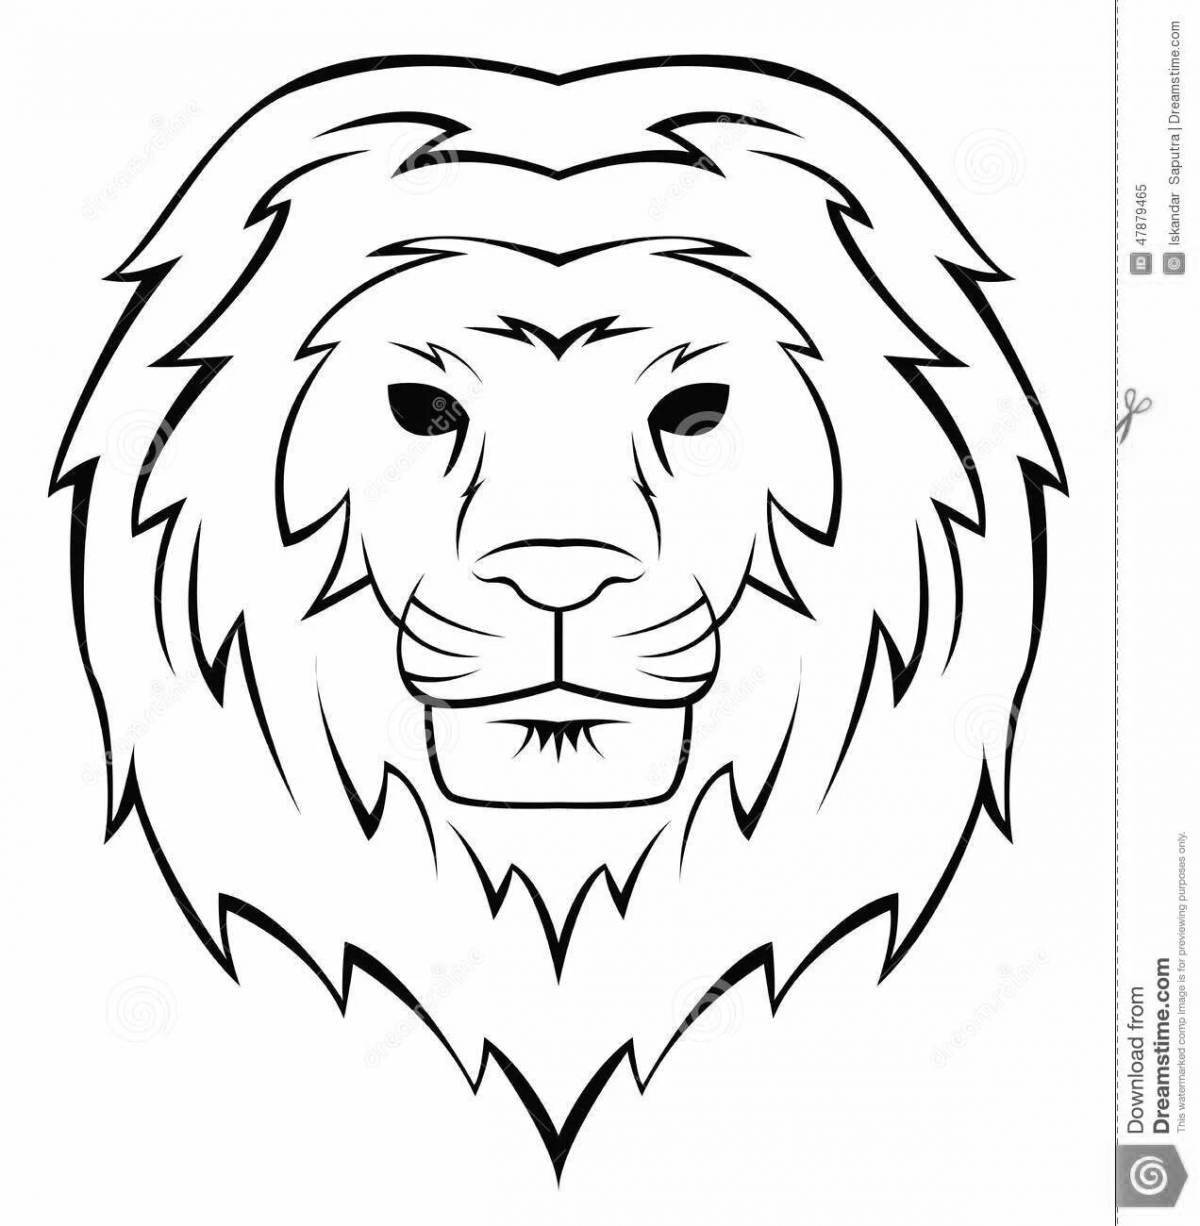 Impressive lion head coloring page